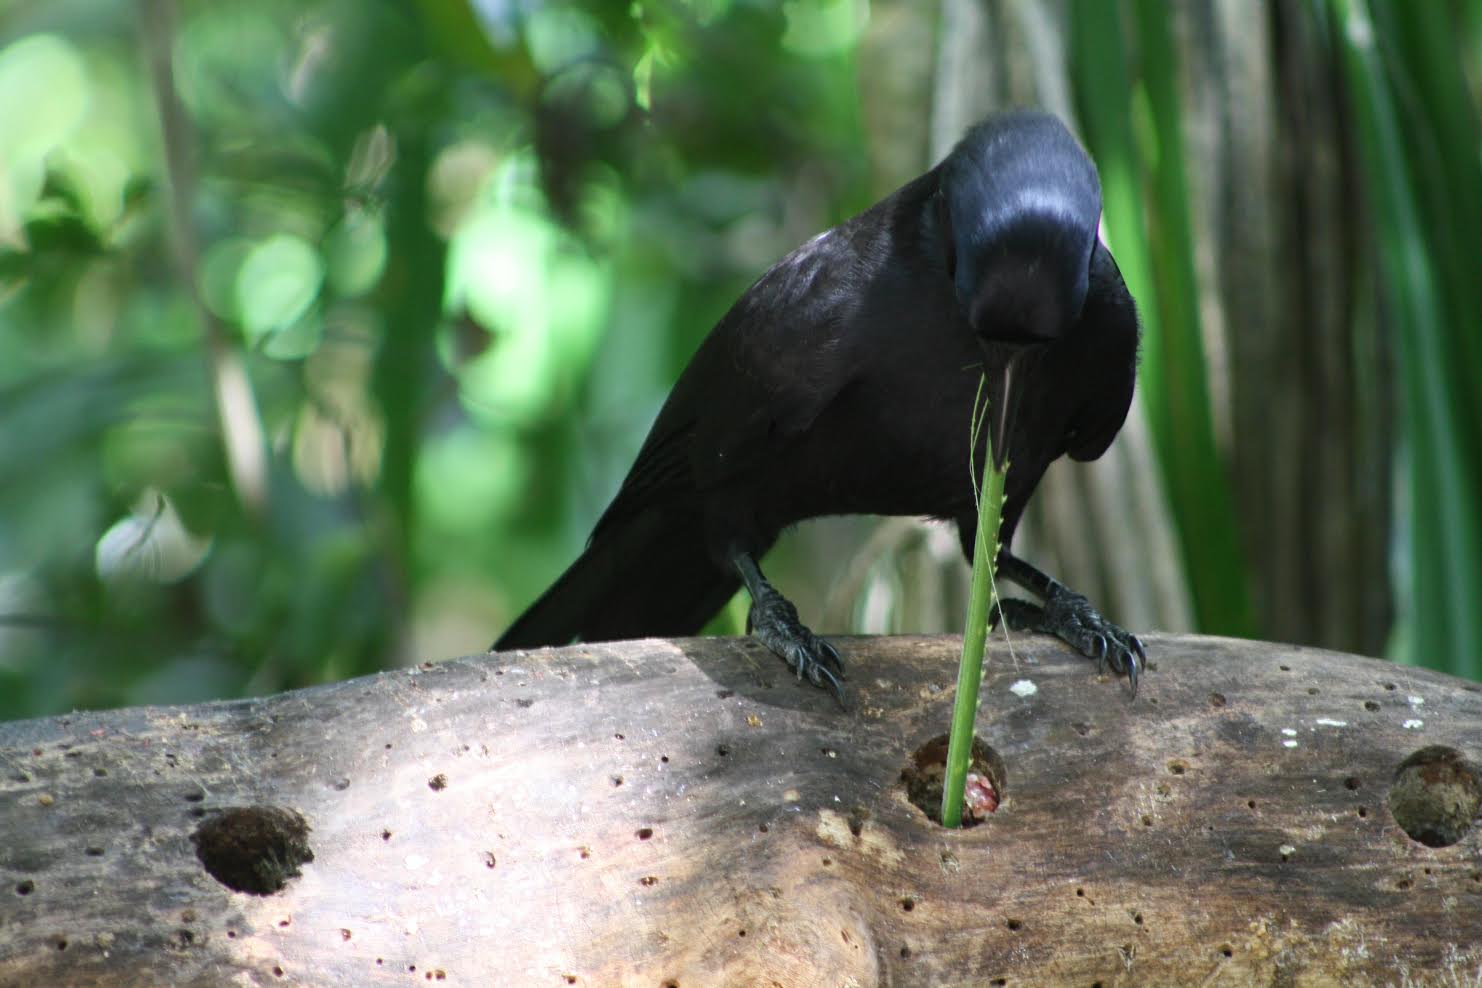 A New Caledonian crow using a pandanus leaf tool. Credit: Mick Sibley